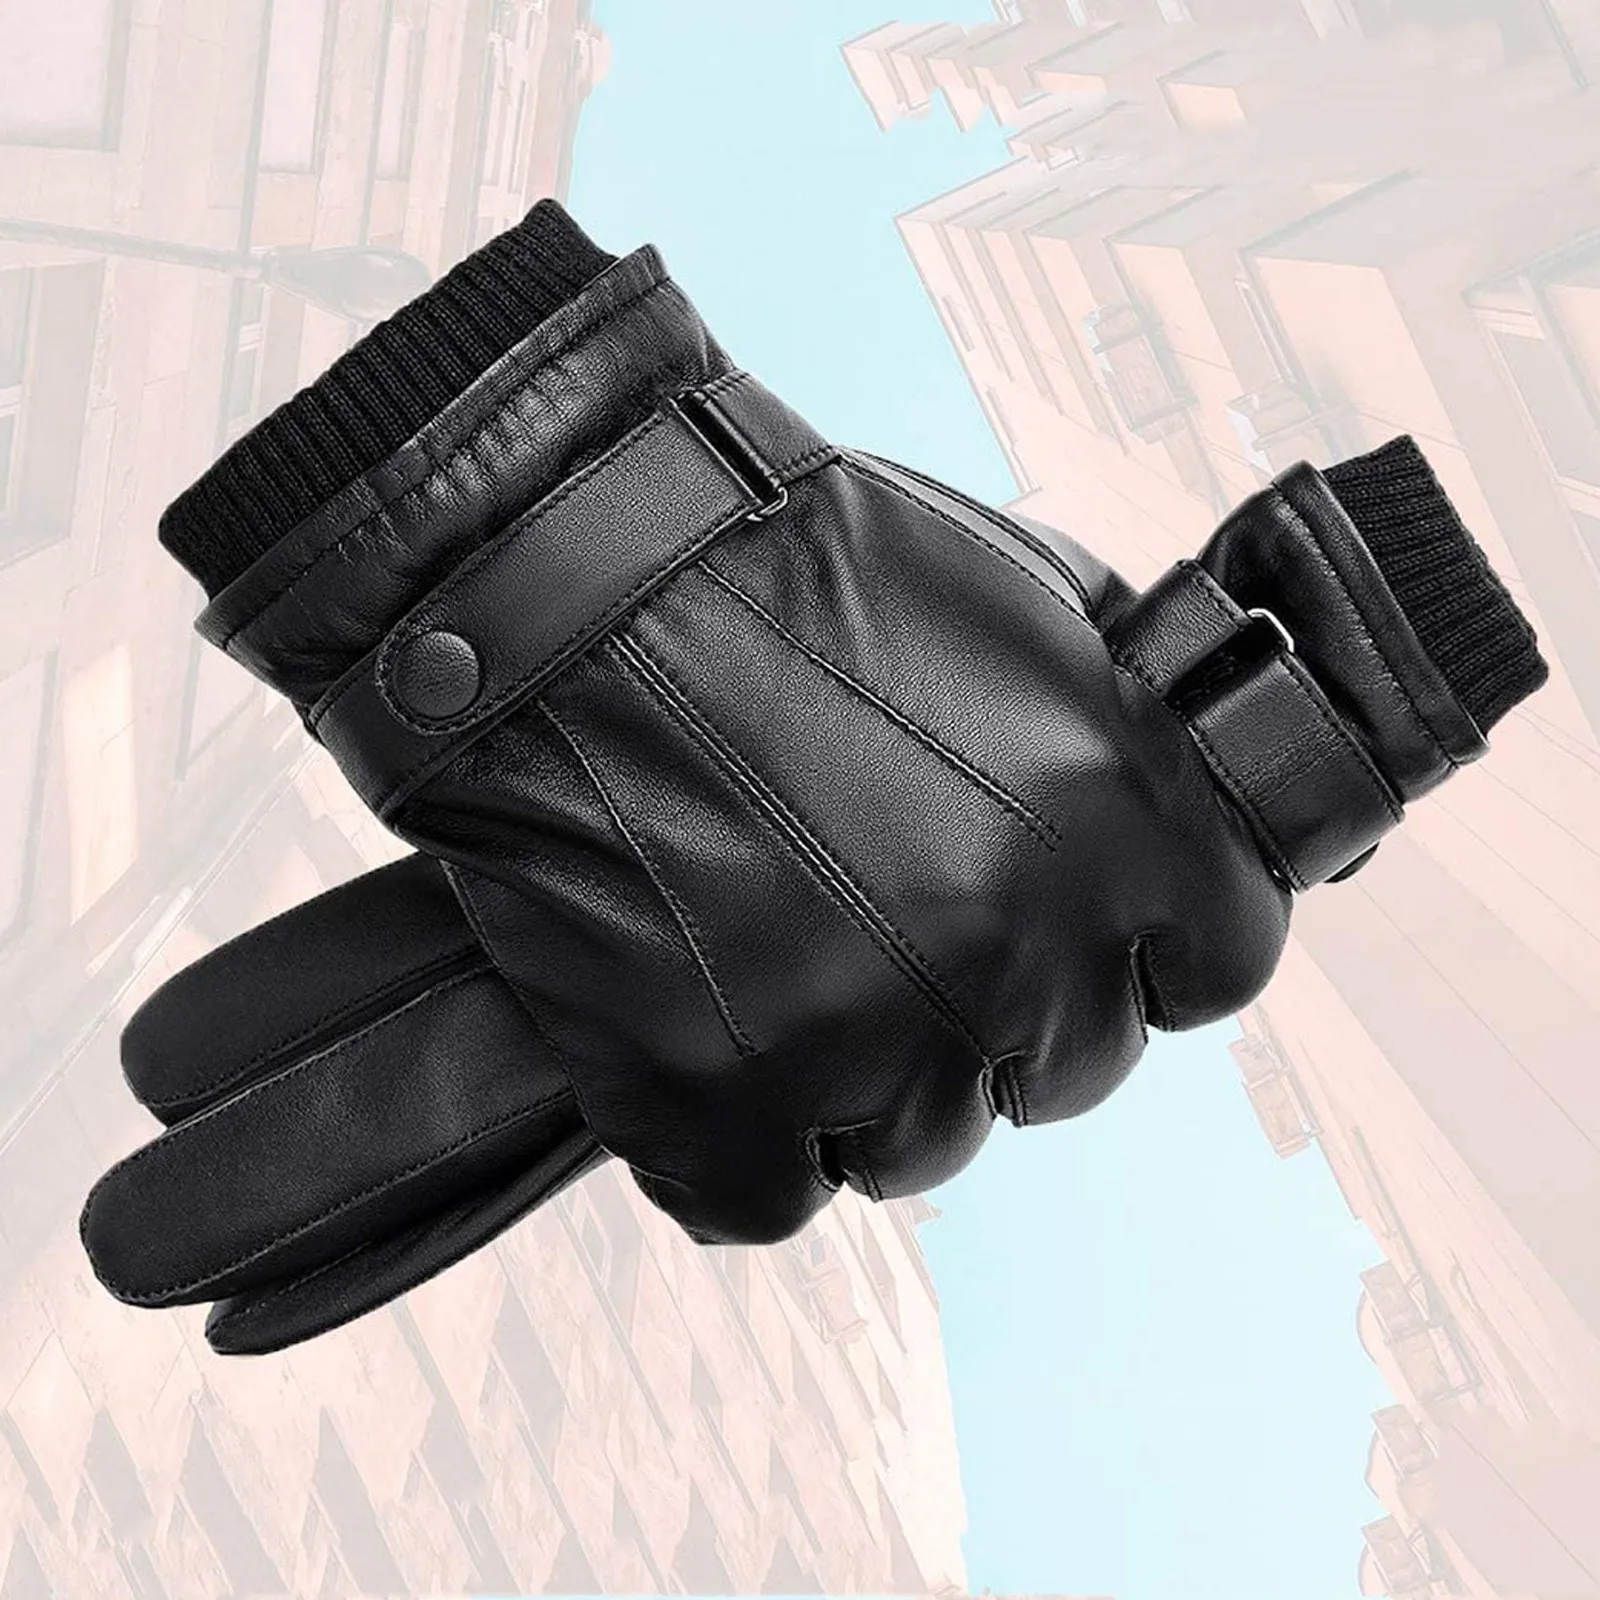 New Winter man sheepskin leather gloves male warm soft men's gloves black men mittens Flannel lining glove touch Screen 2021 best mens leather gloves